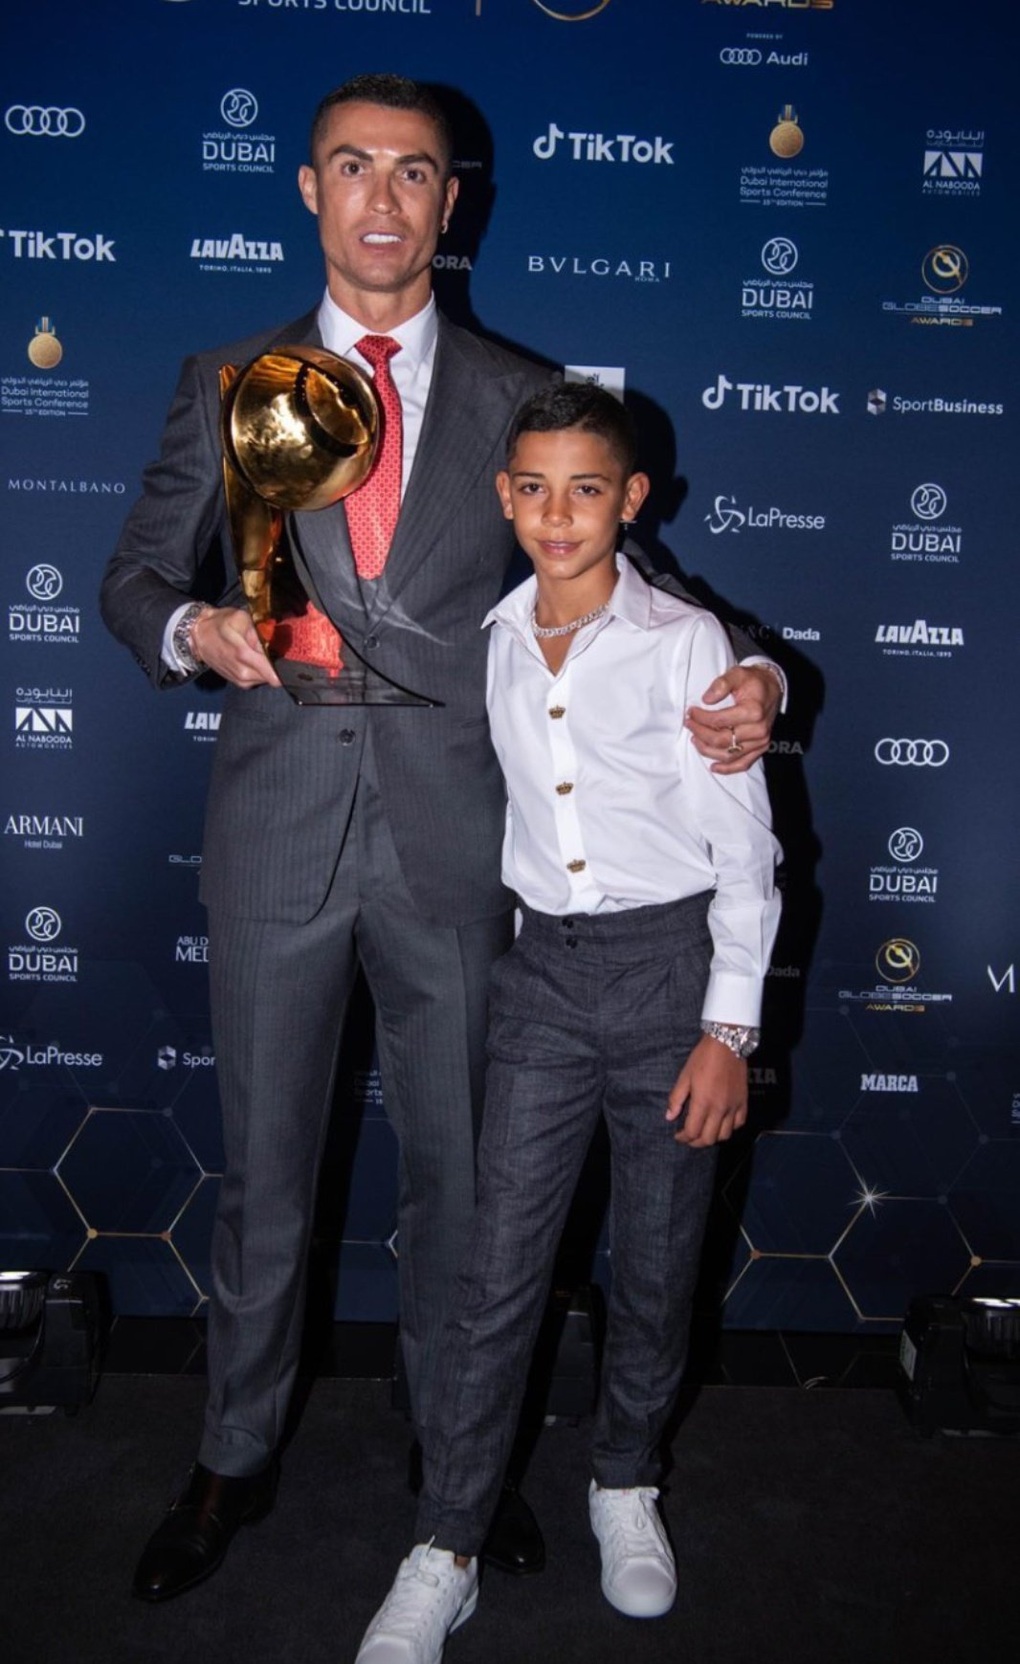 Ronaldo's son, Nicki Minaj, has worn a watch with diamonds worth billions - 4 since childhood